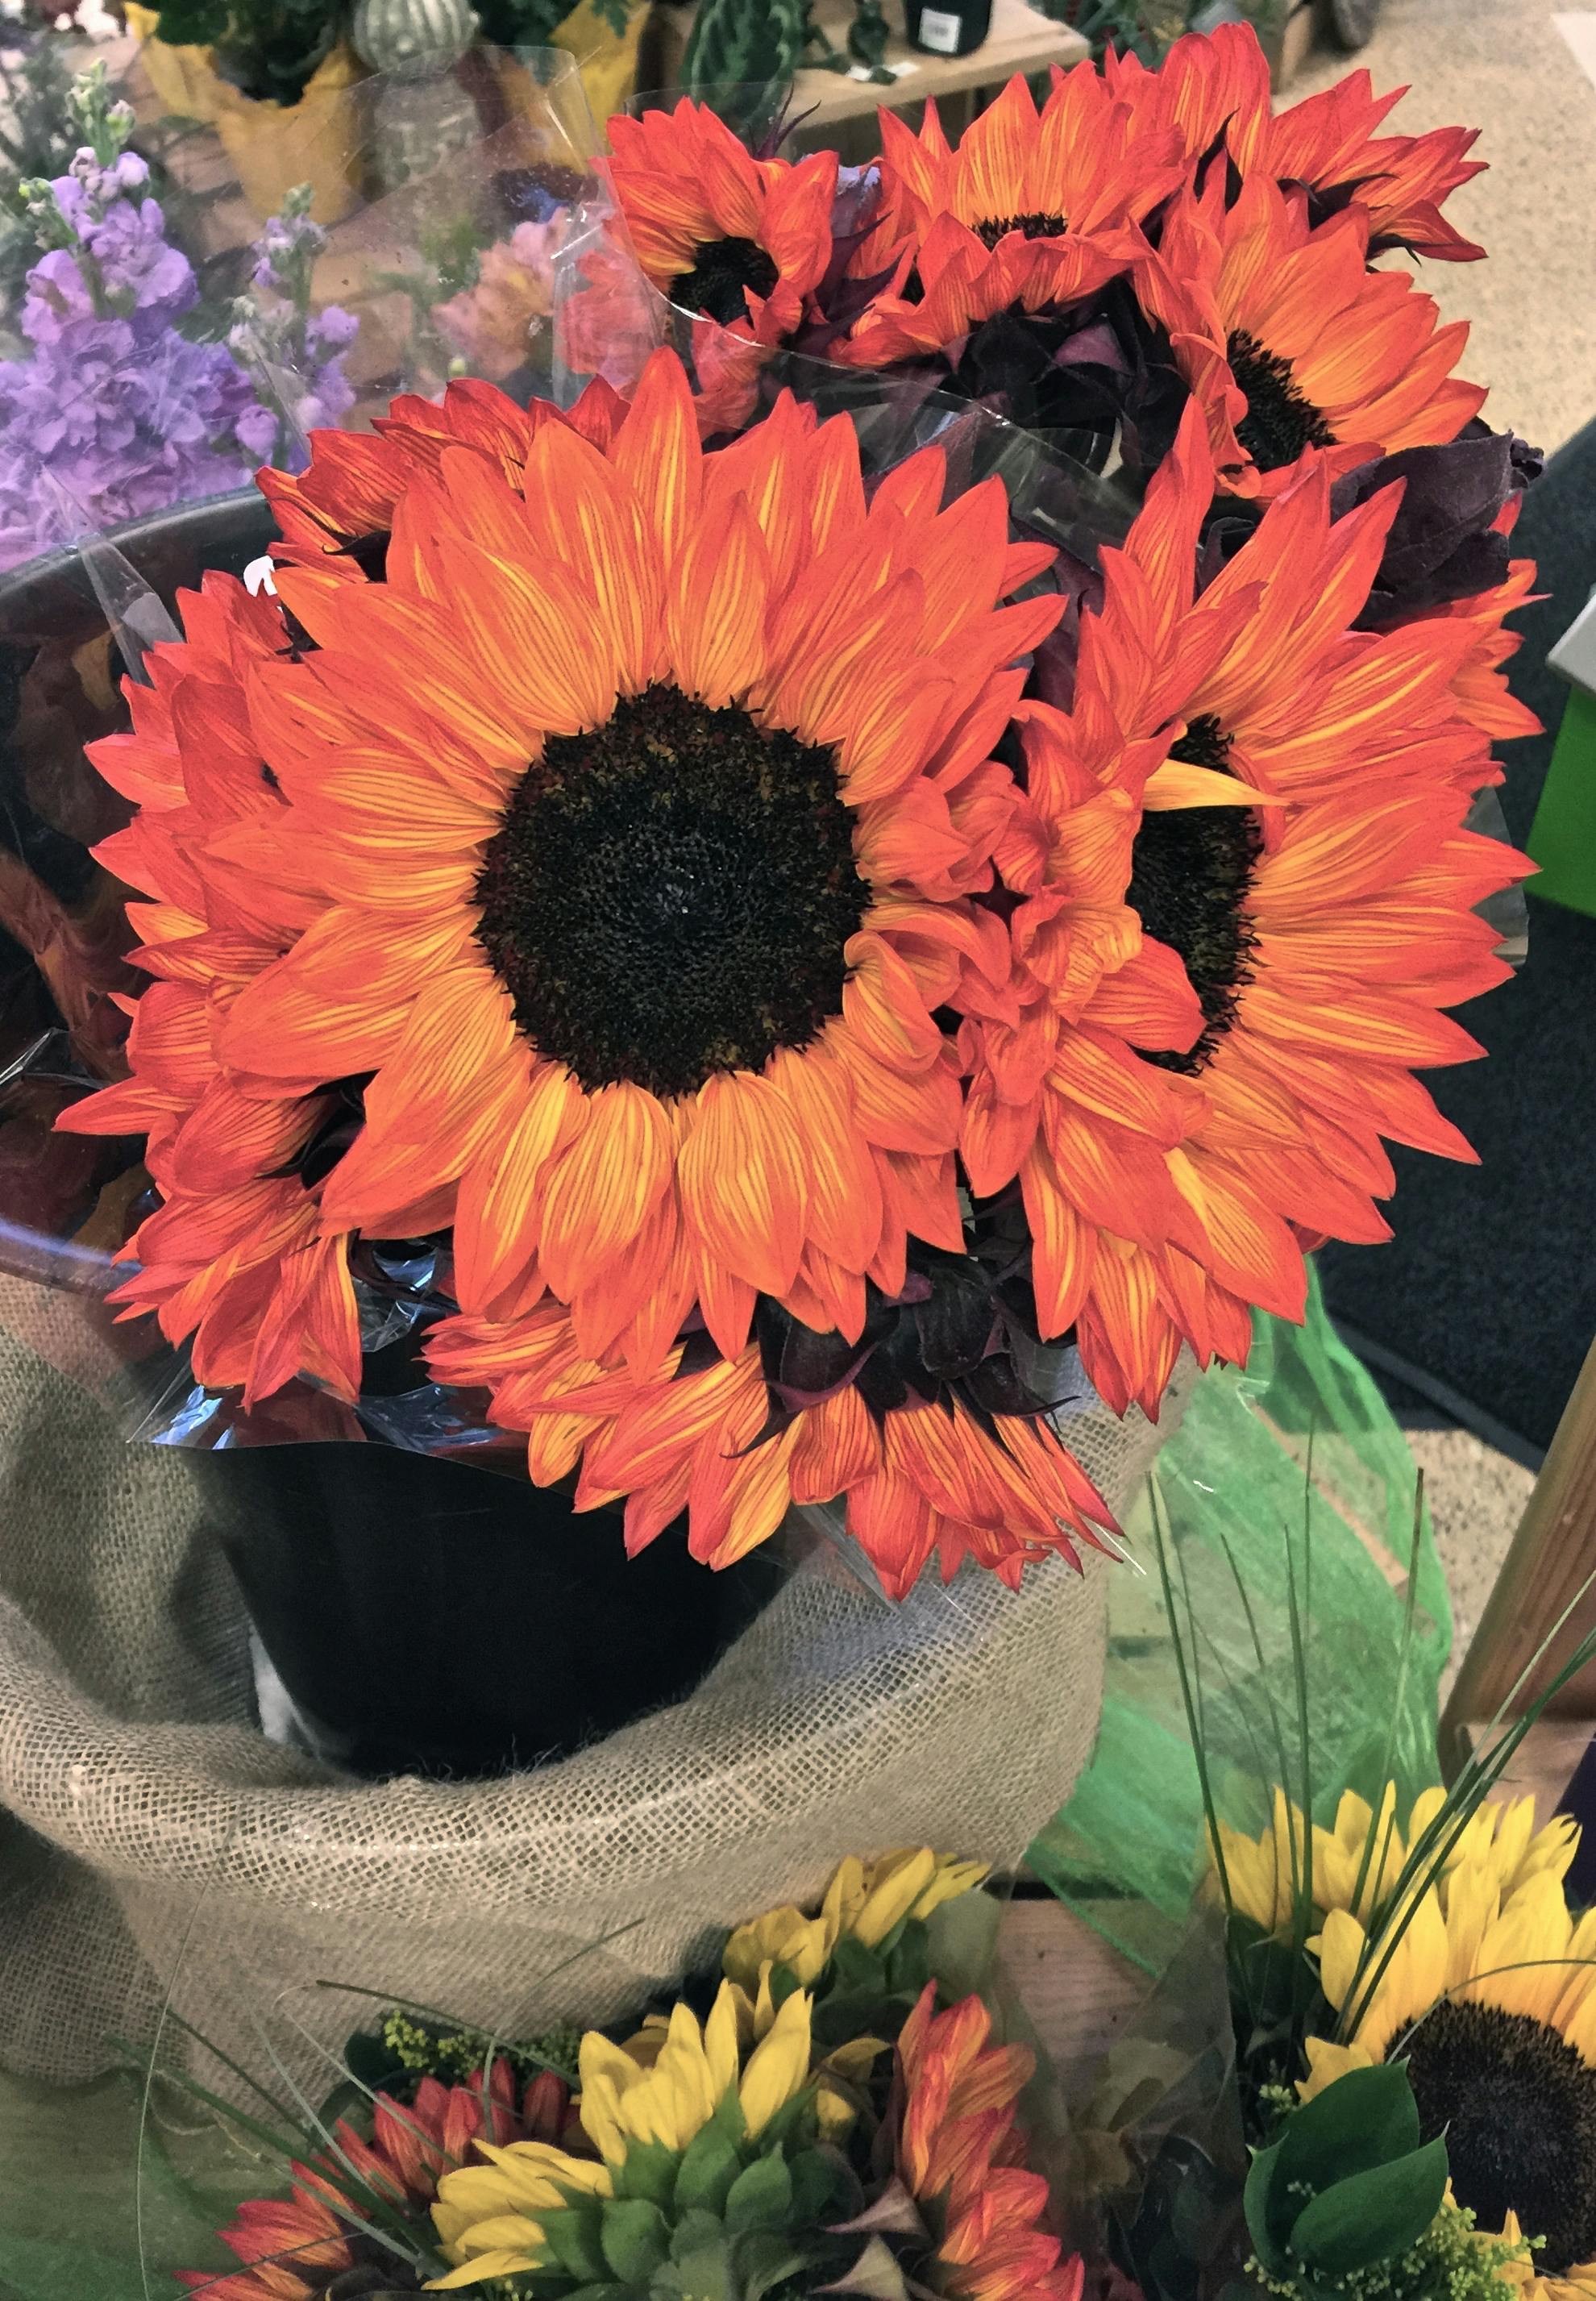 Free stock photo of bunch of flowers, flower arrangement, orange